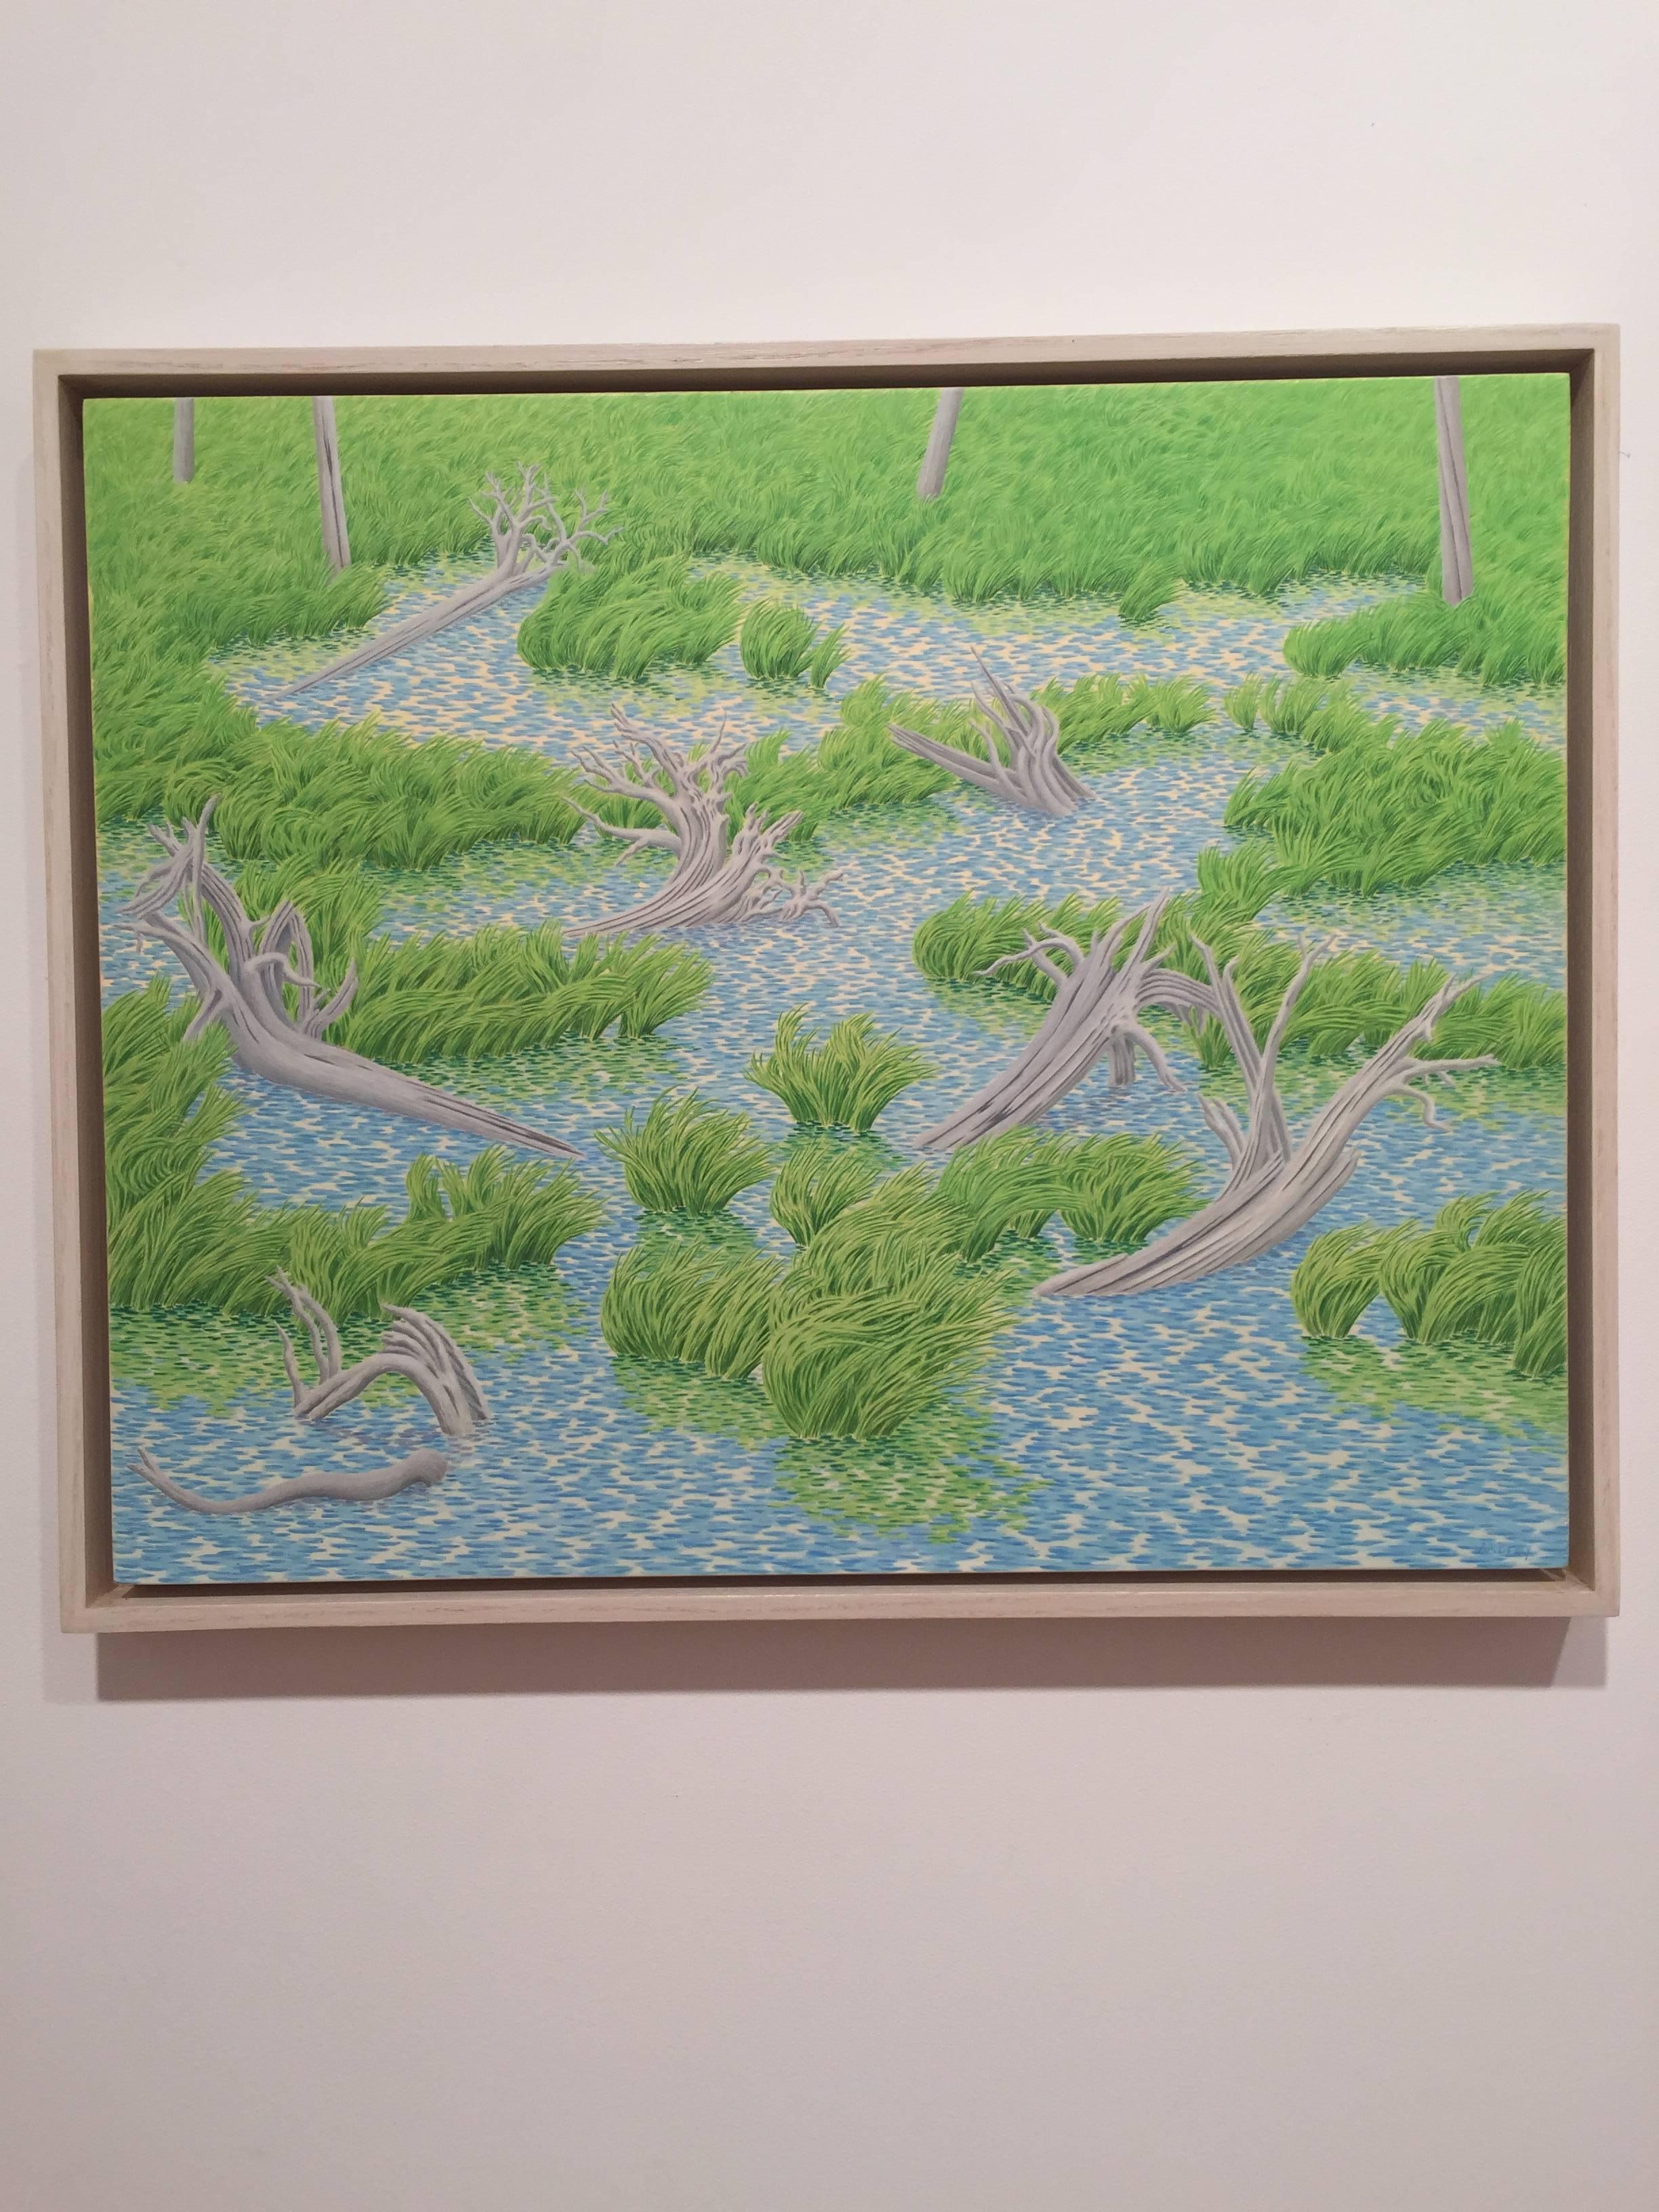 Alan Bray, Pond Margin, Casein on panel landscape painting, 2010 1